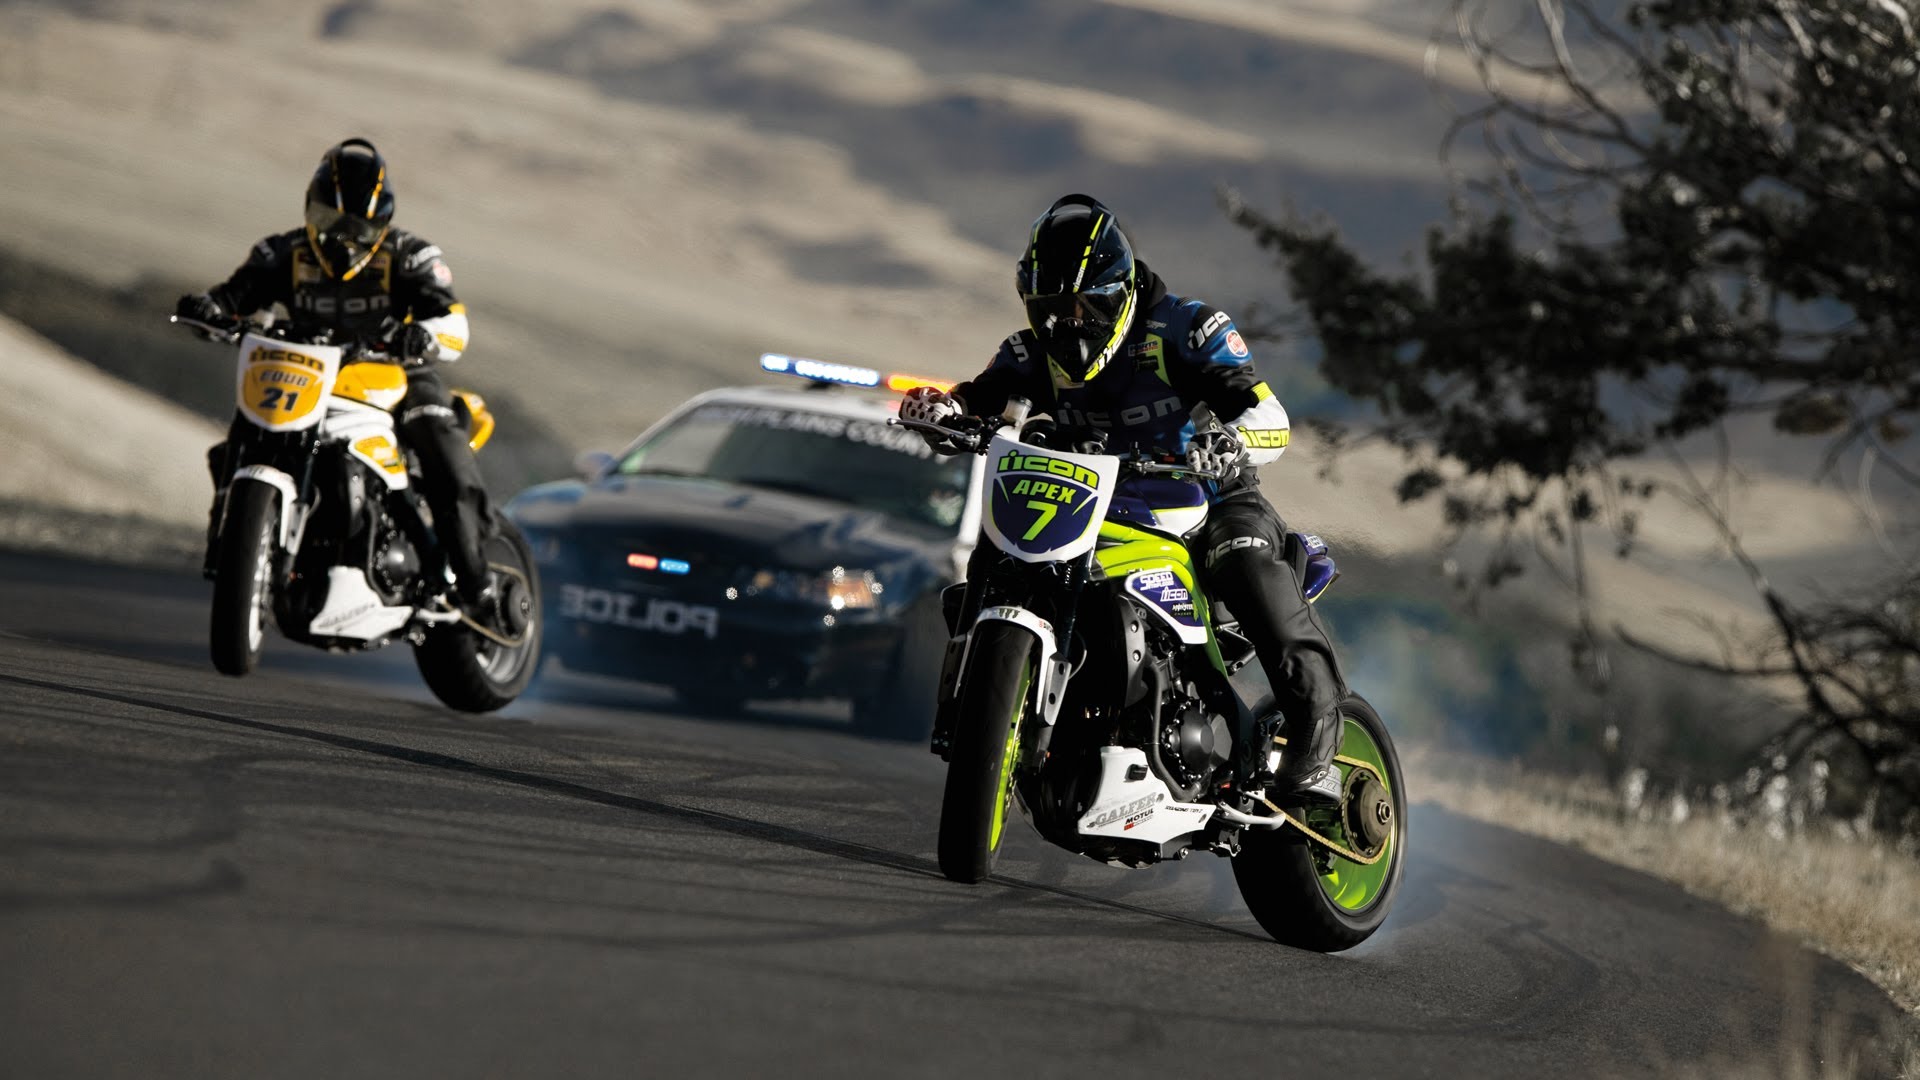 Desktop Bike Stunt Images Wallpaper - Motorcycle Vs Car Drift Battle 2 , HD Wallpaper & Backgrounds